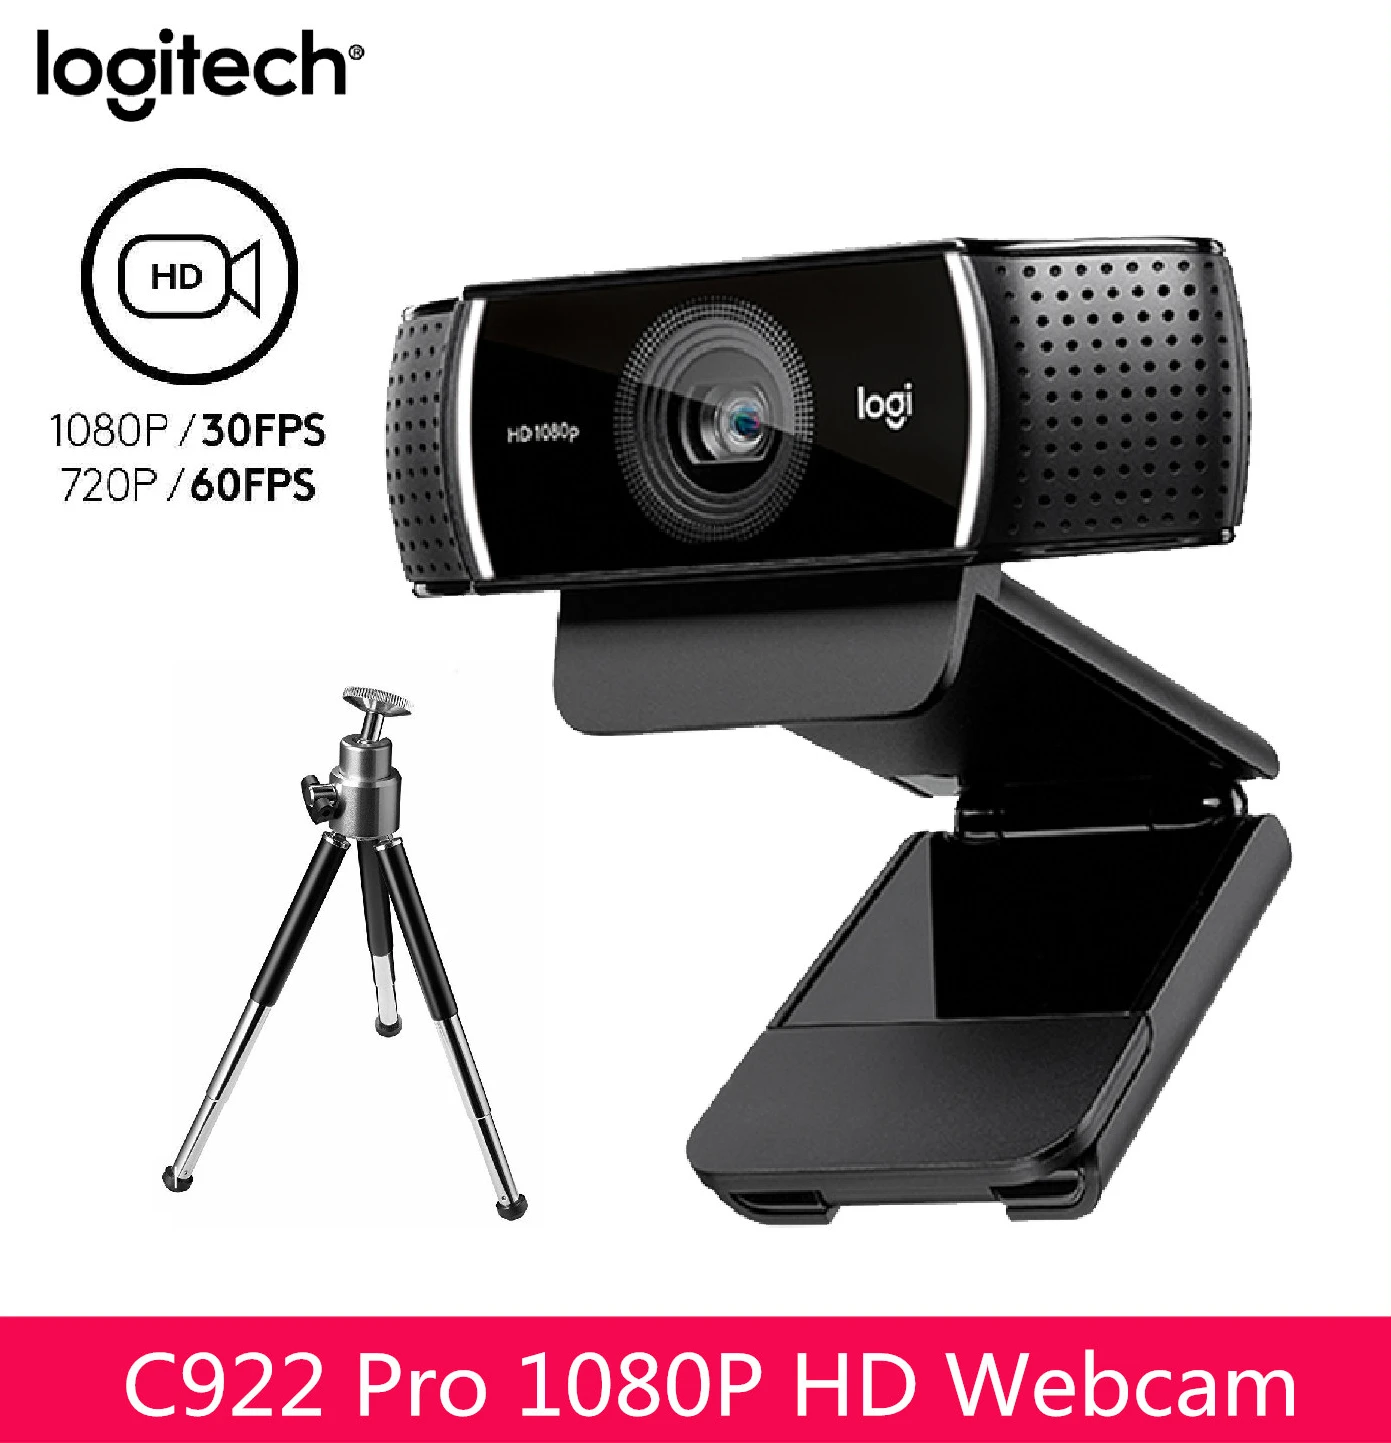 

Promotion!!! C922 Pro Webcam Built-in Microphone With Tripod 1080p HD Camera C922 Logitech 1080P Web 30FP